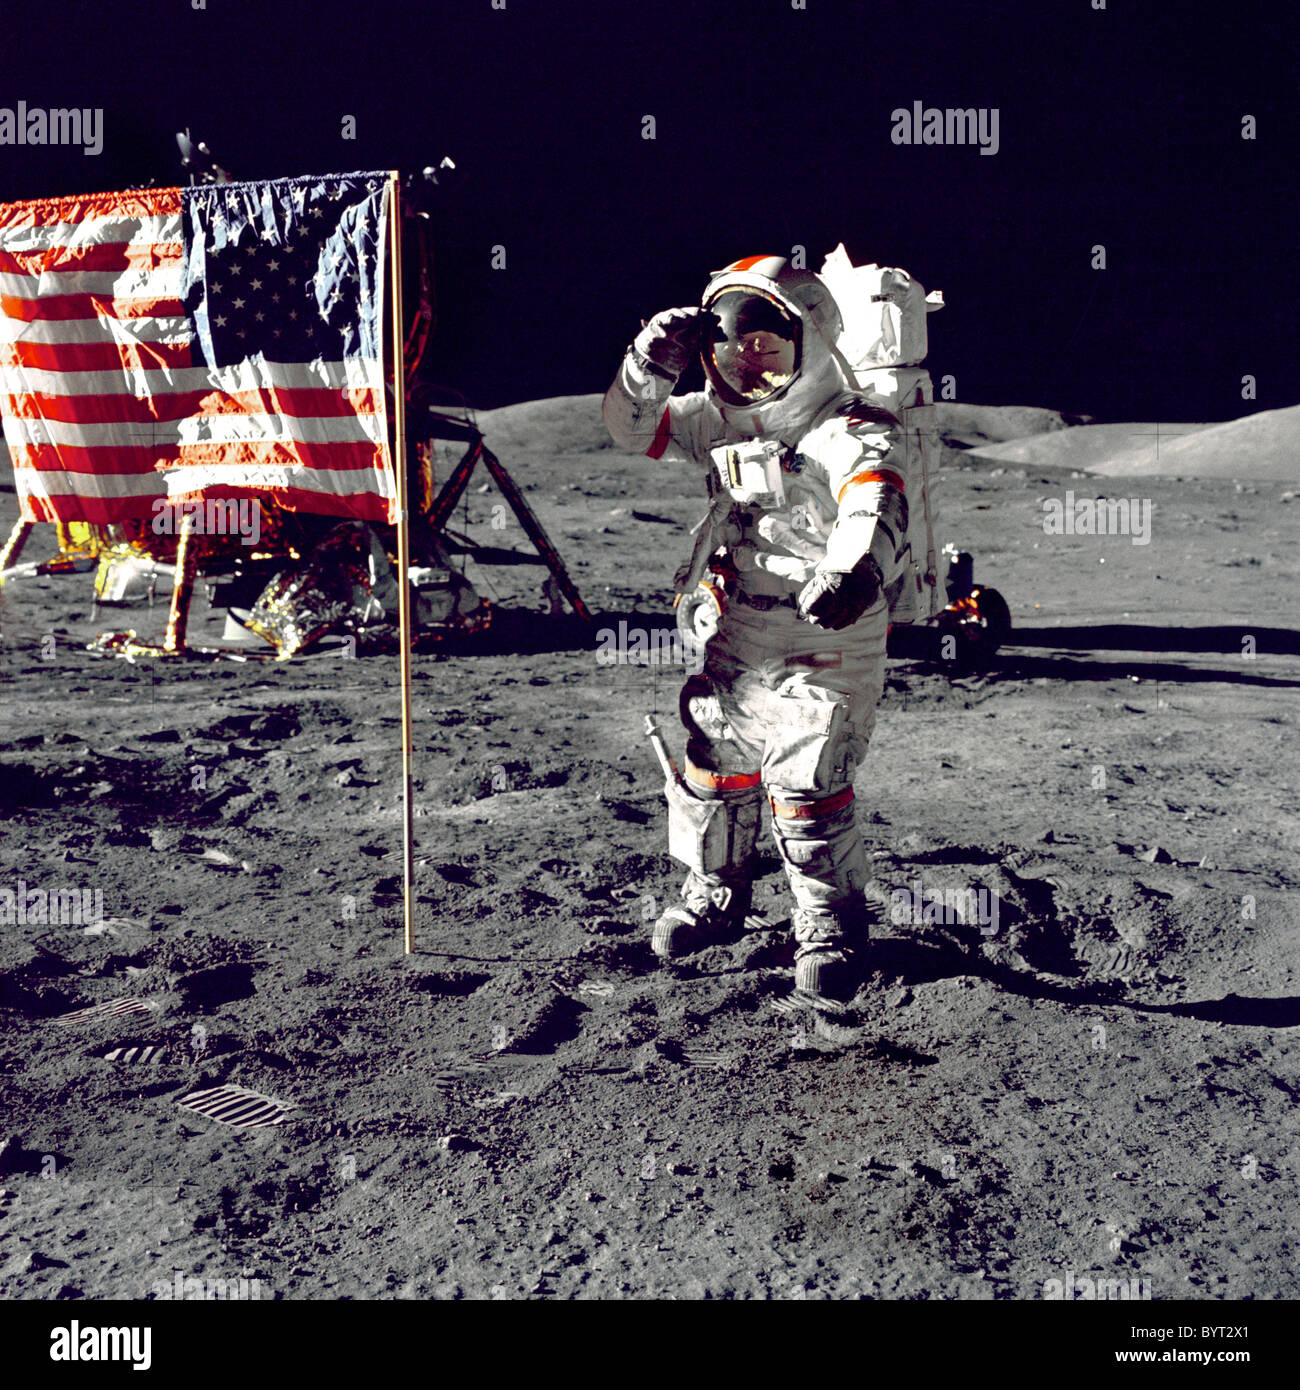 Apollo 17 astronaut Eugene A. Cernan salutes the U.S. flag during the moon landing. Stock Photo